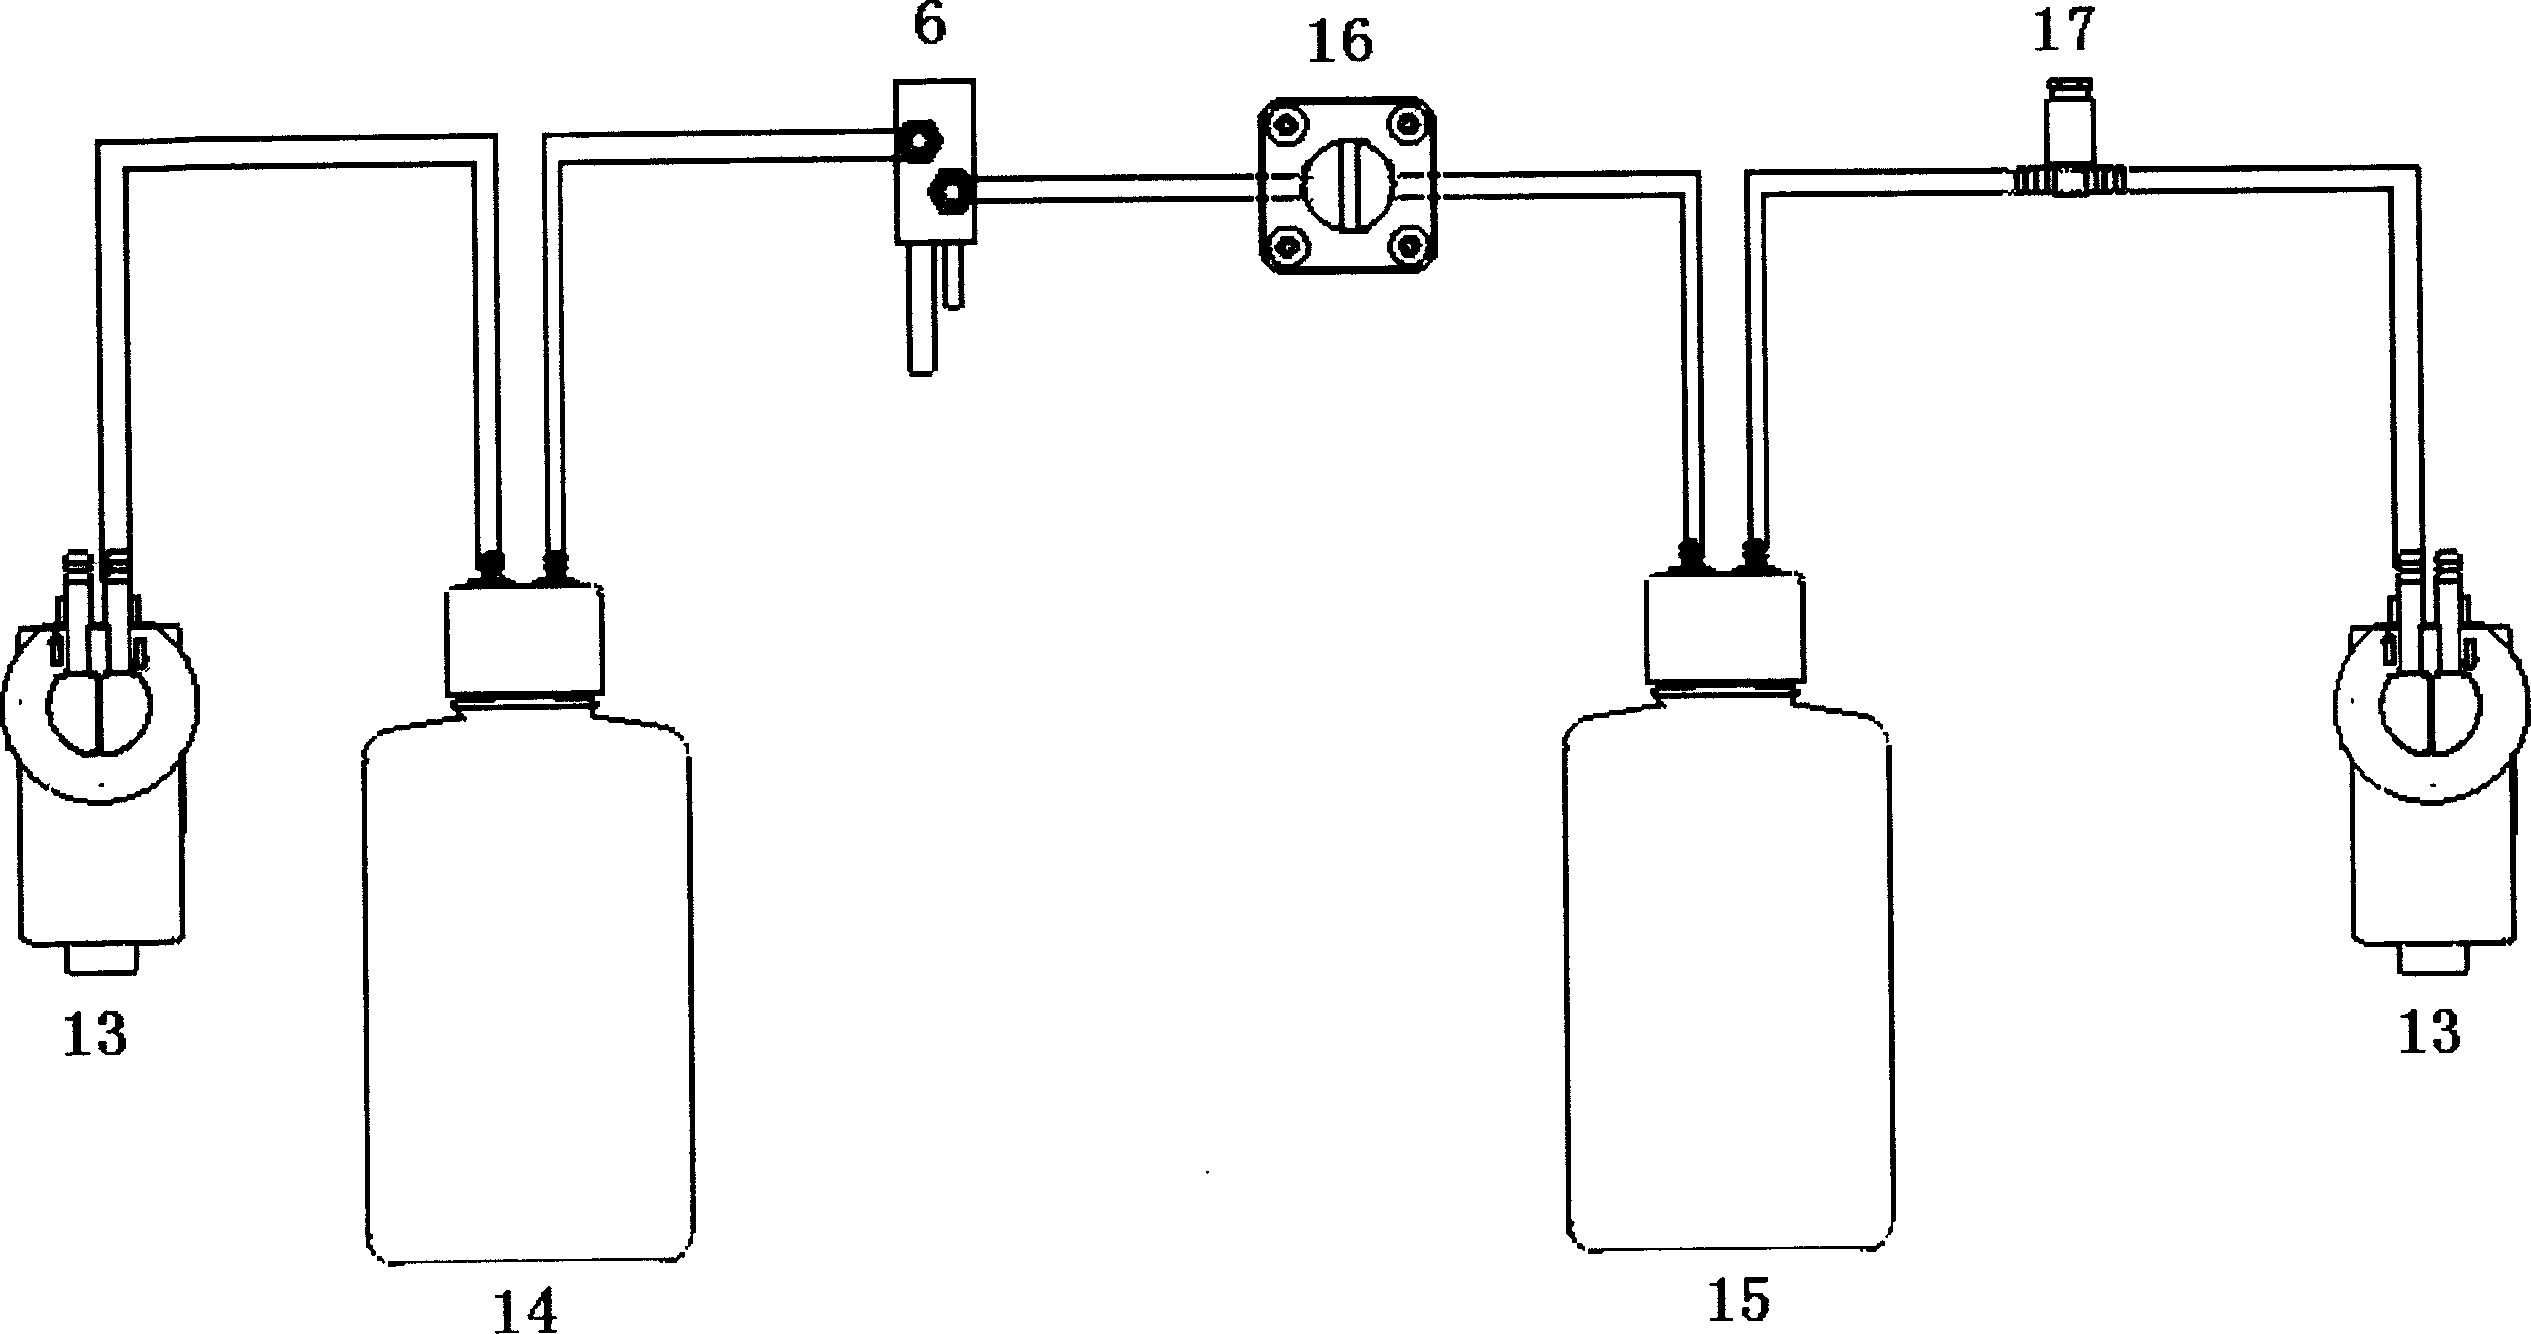 Biochip reaction apparatus